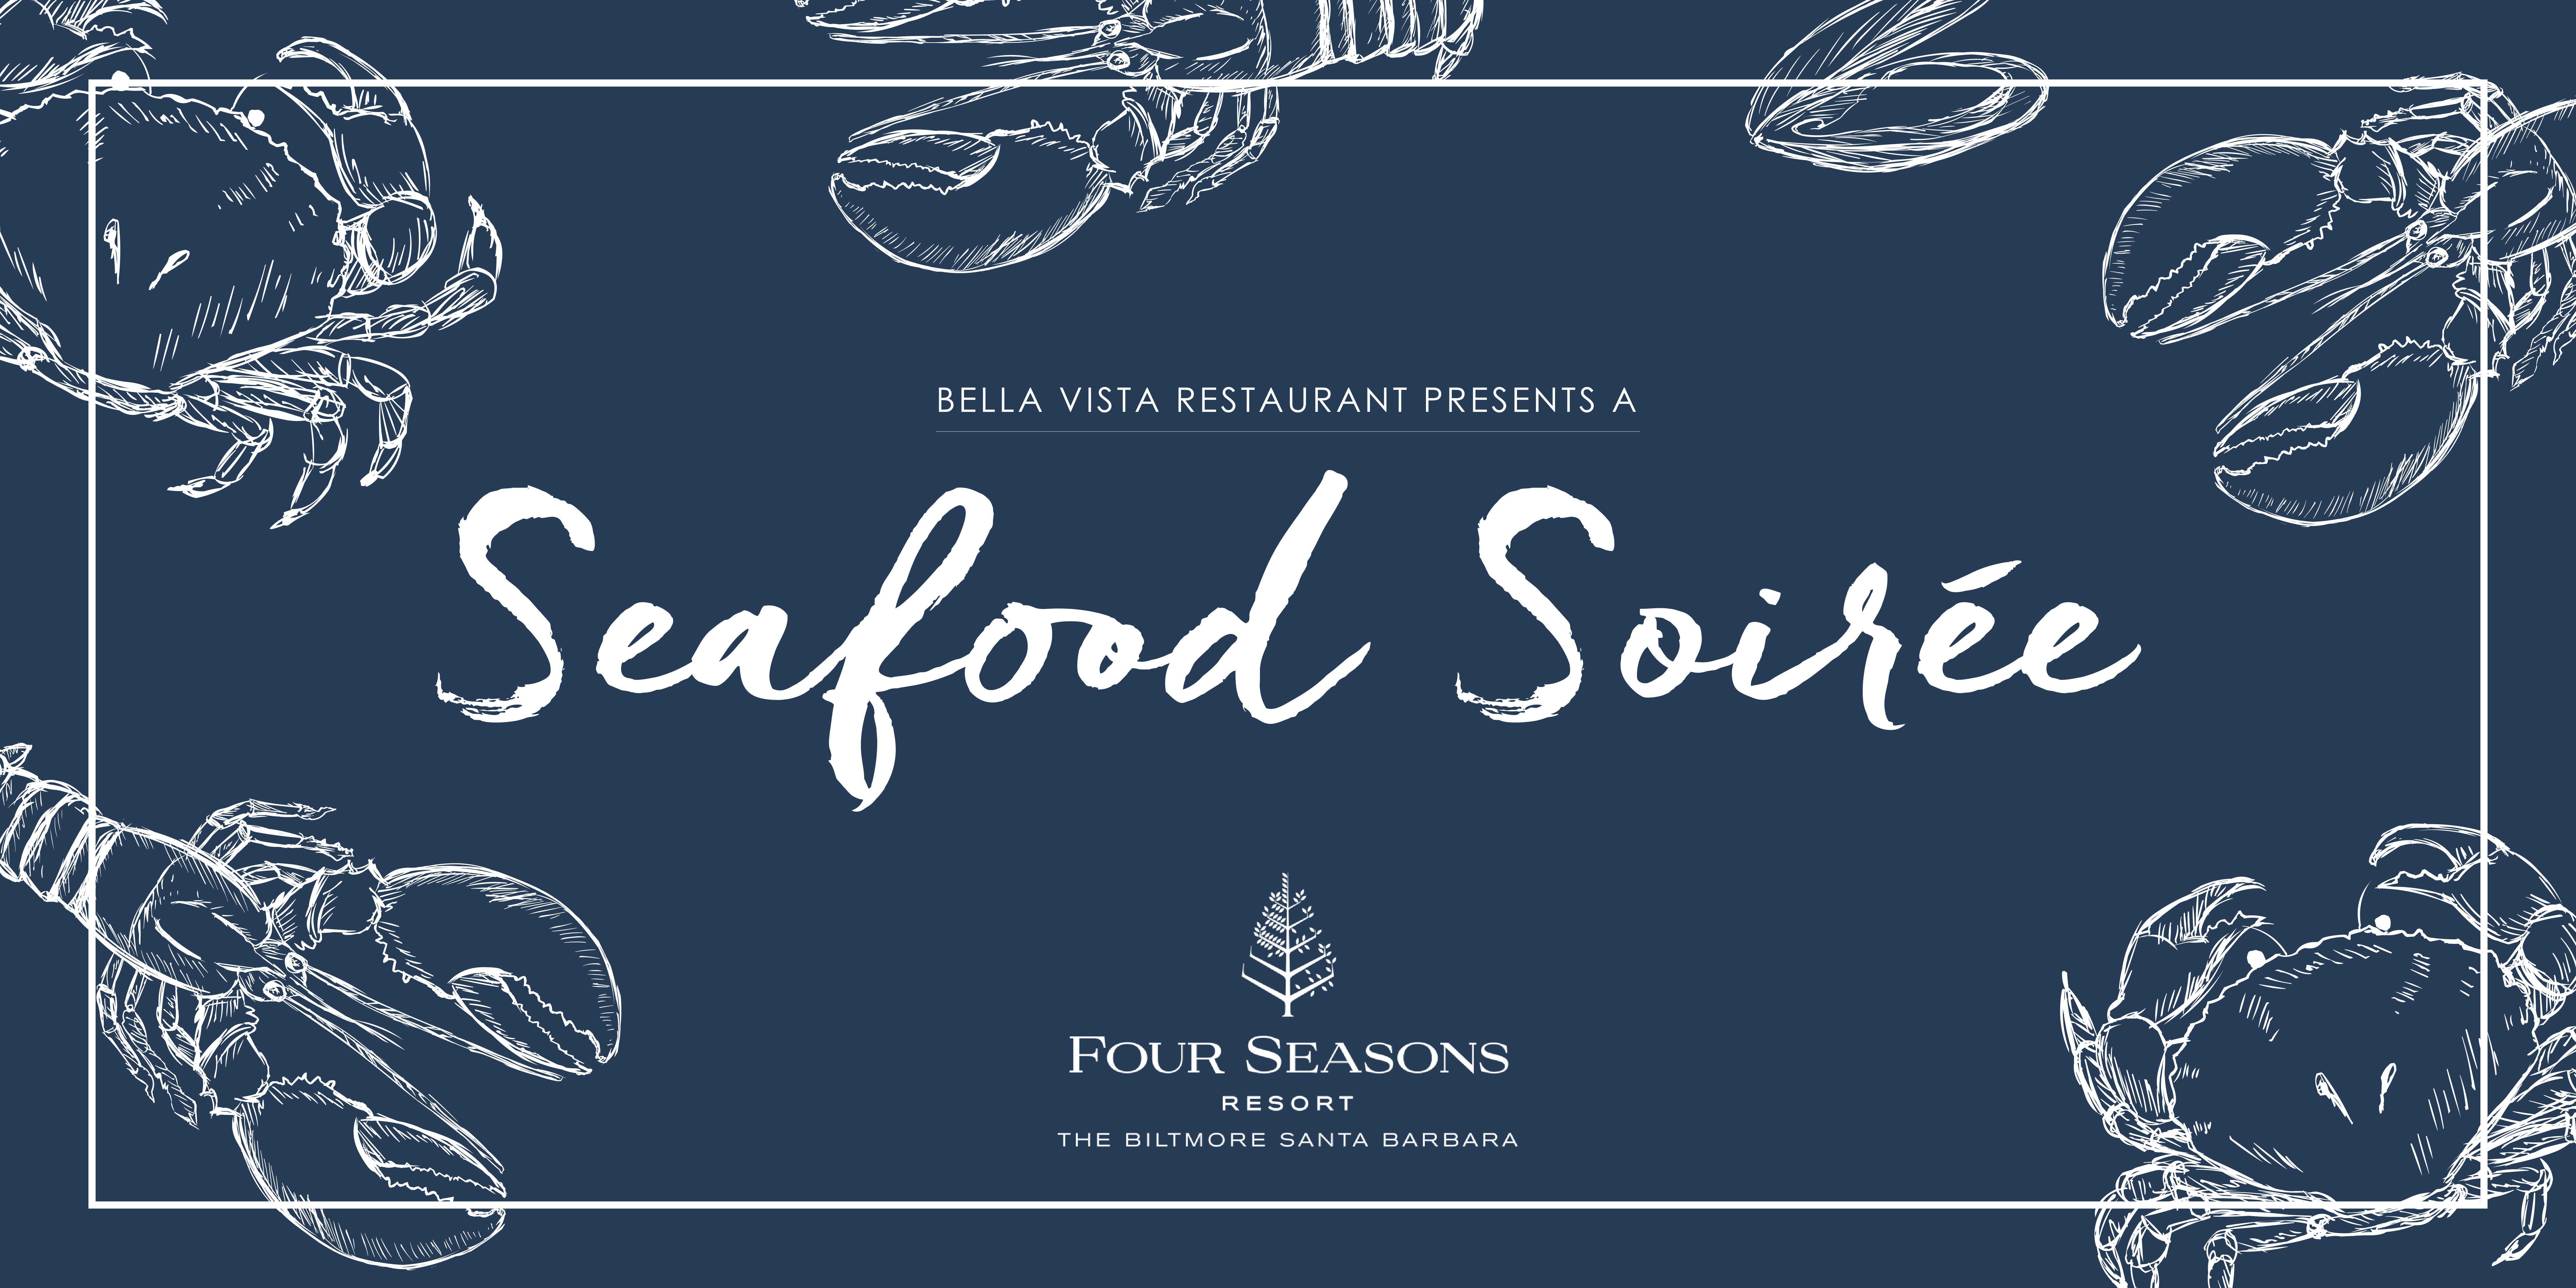 Seafood Soirée at Bella Vista Restaurant